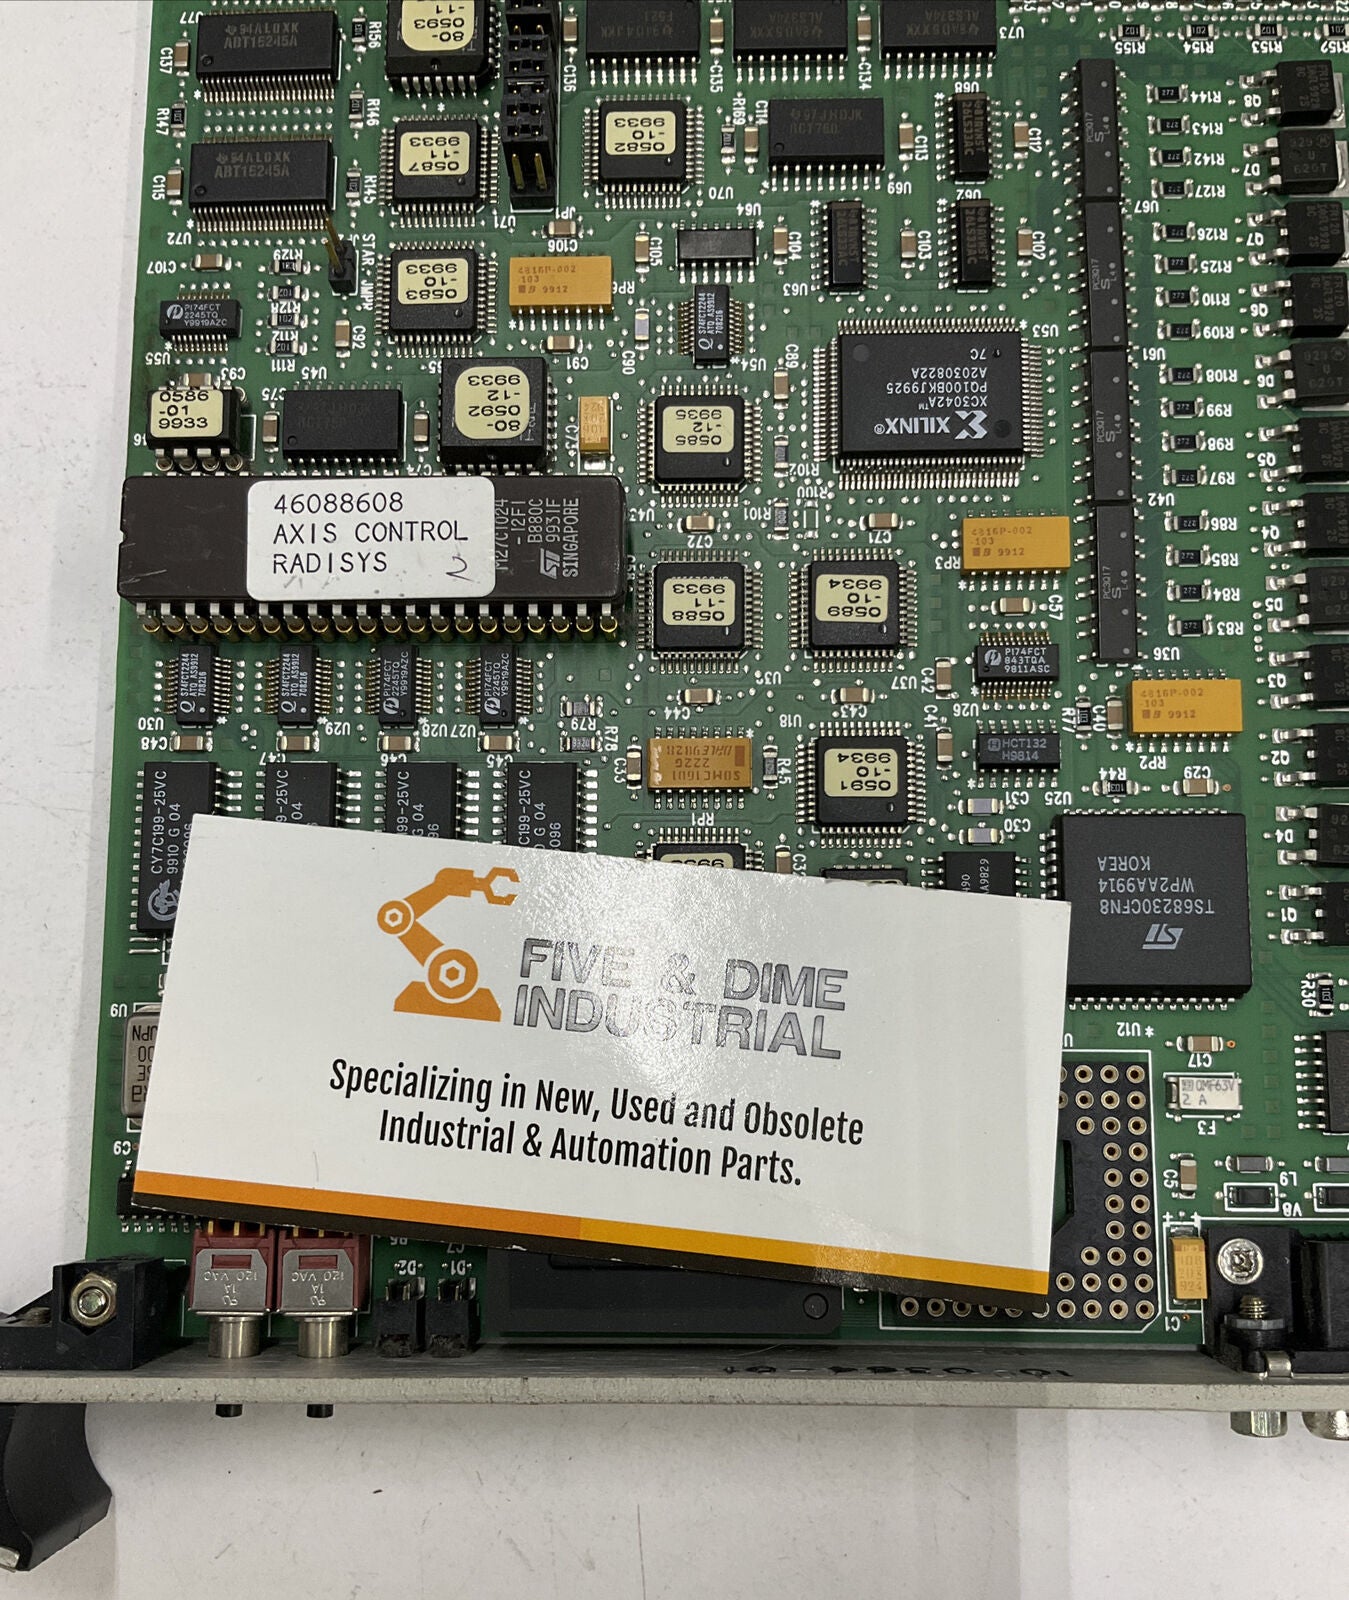 Radisys UIMC 46088608 Axis Control Board PCB (CB106)